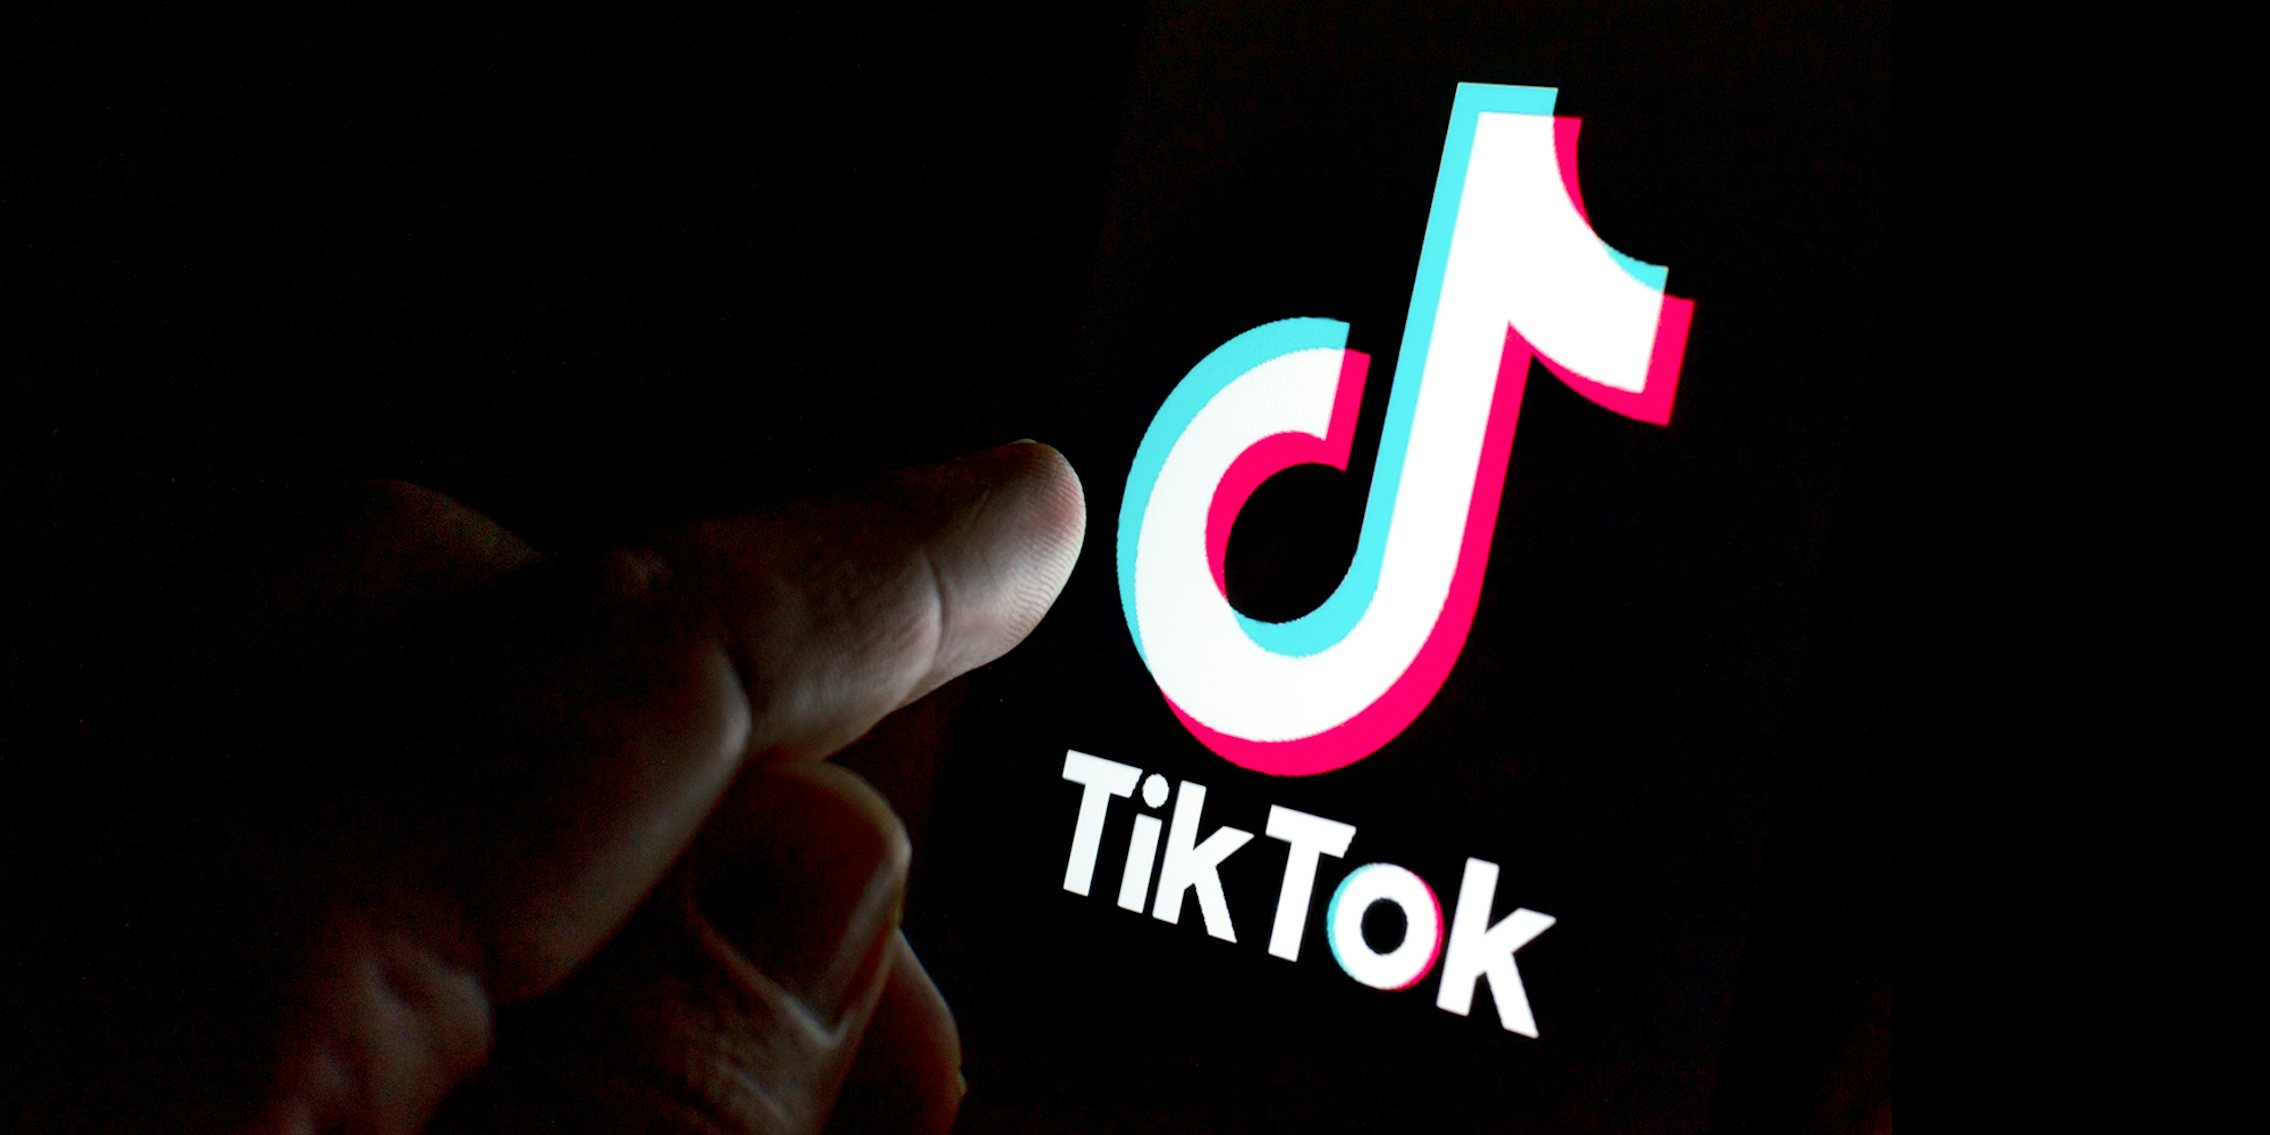 finger reaching out to touch tiktok logo